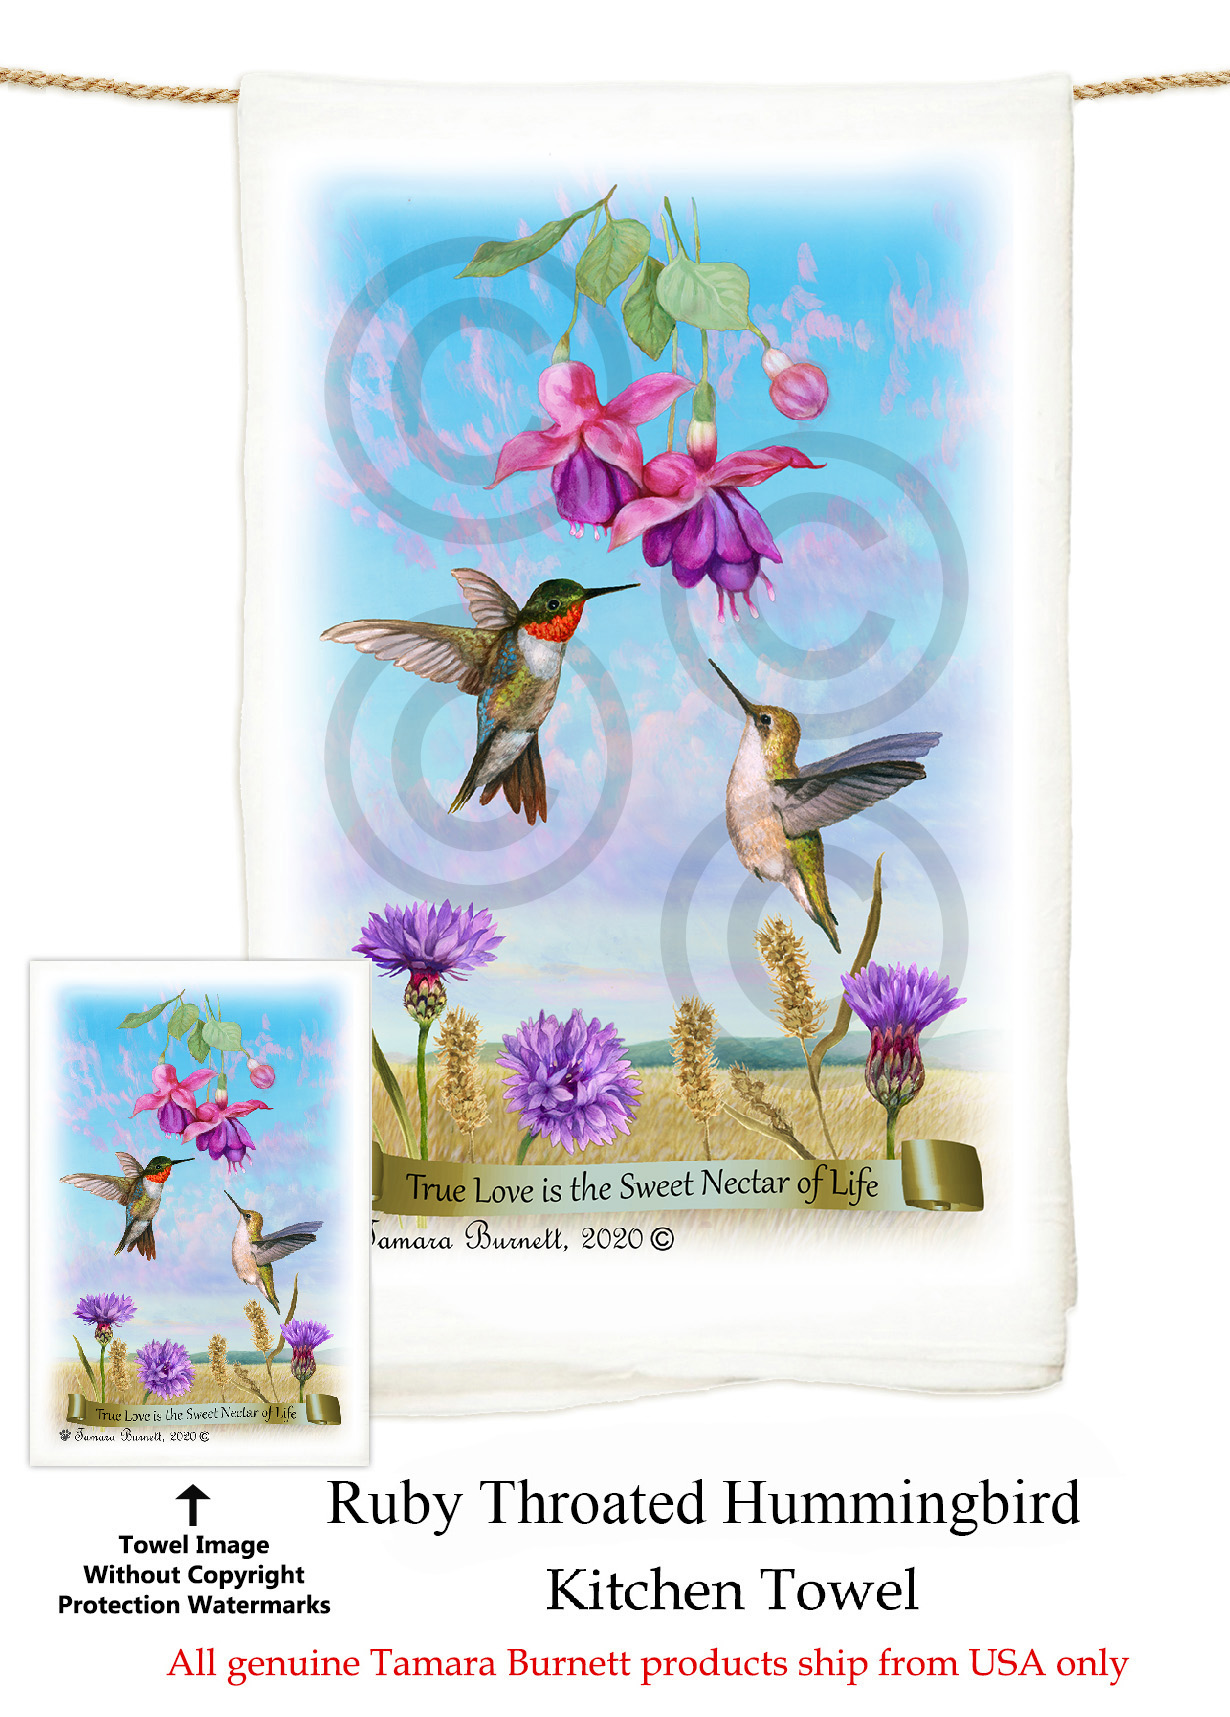 Ruby Throated Hummingbirds - Flour Sack Towel image sized 1230 x 1717